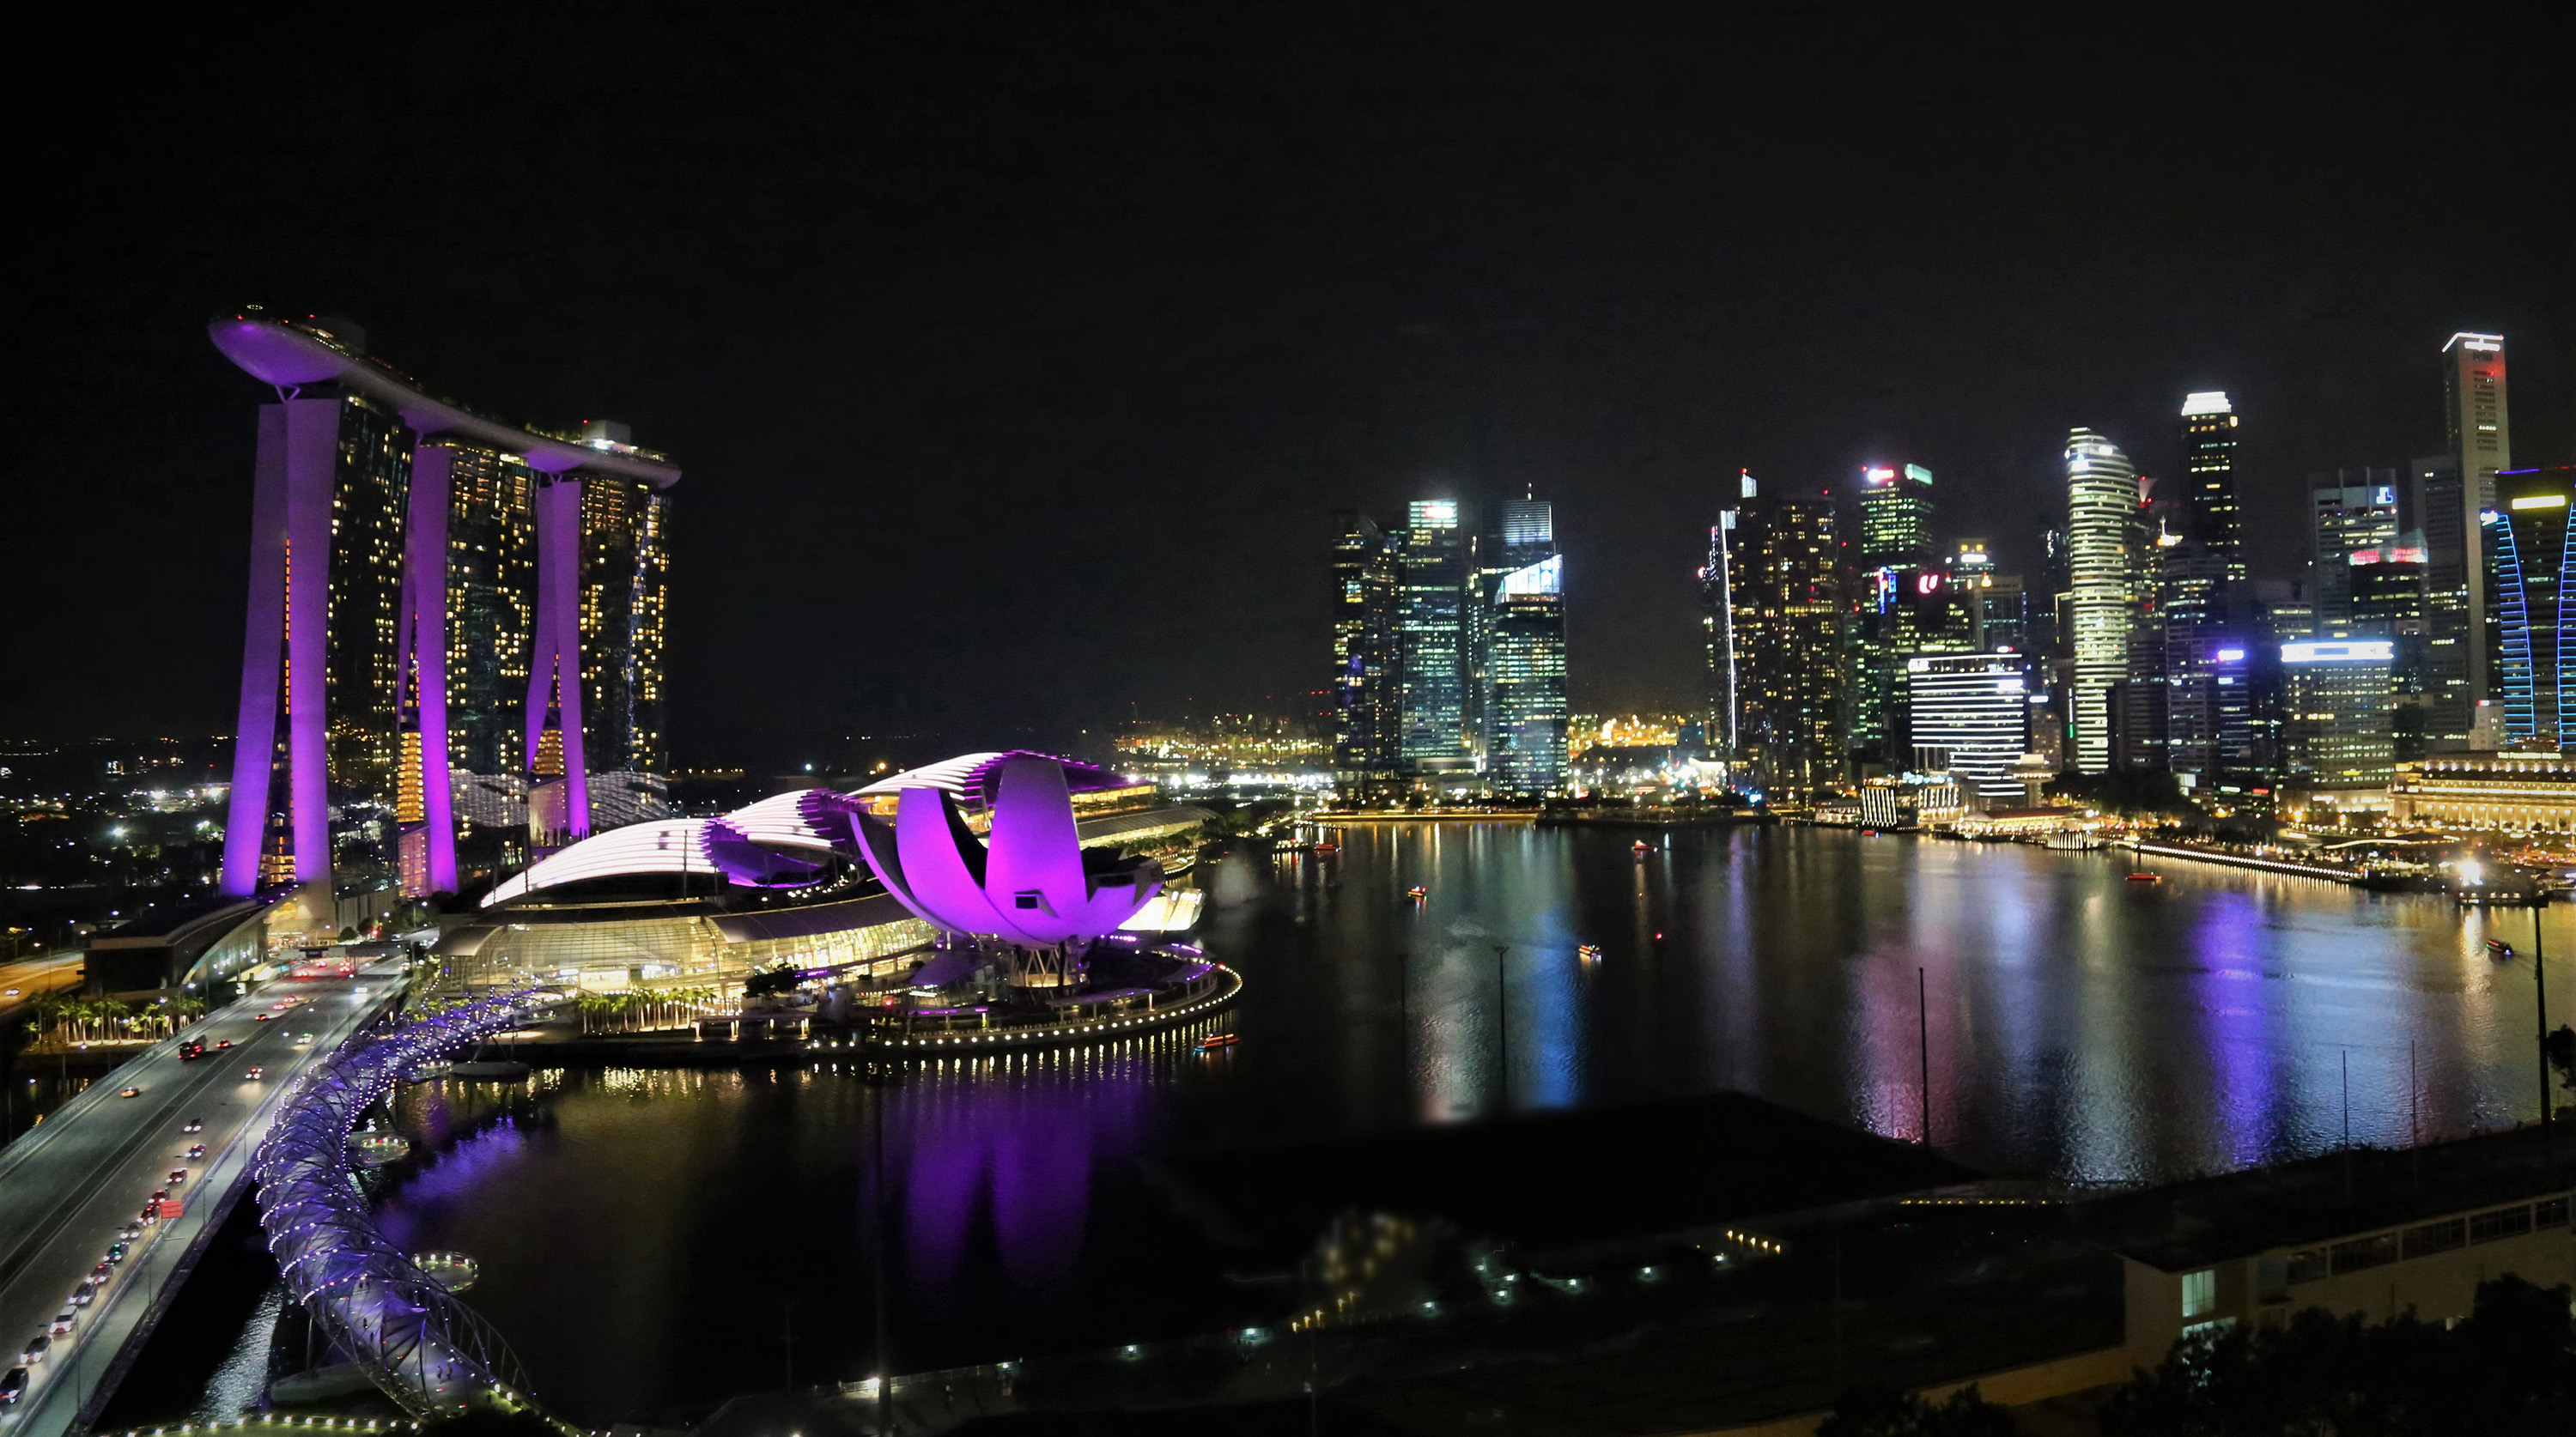 Singapore at night 0.jpg